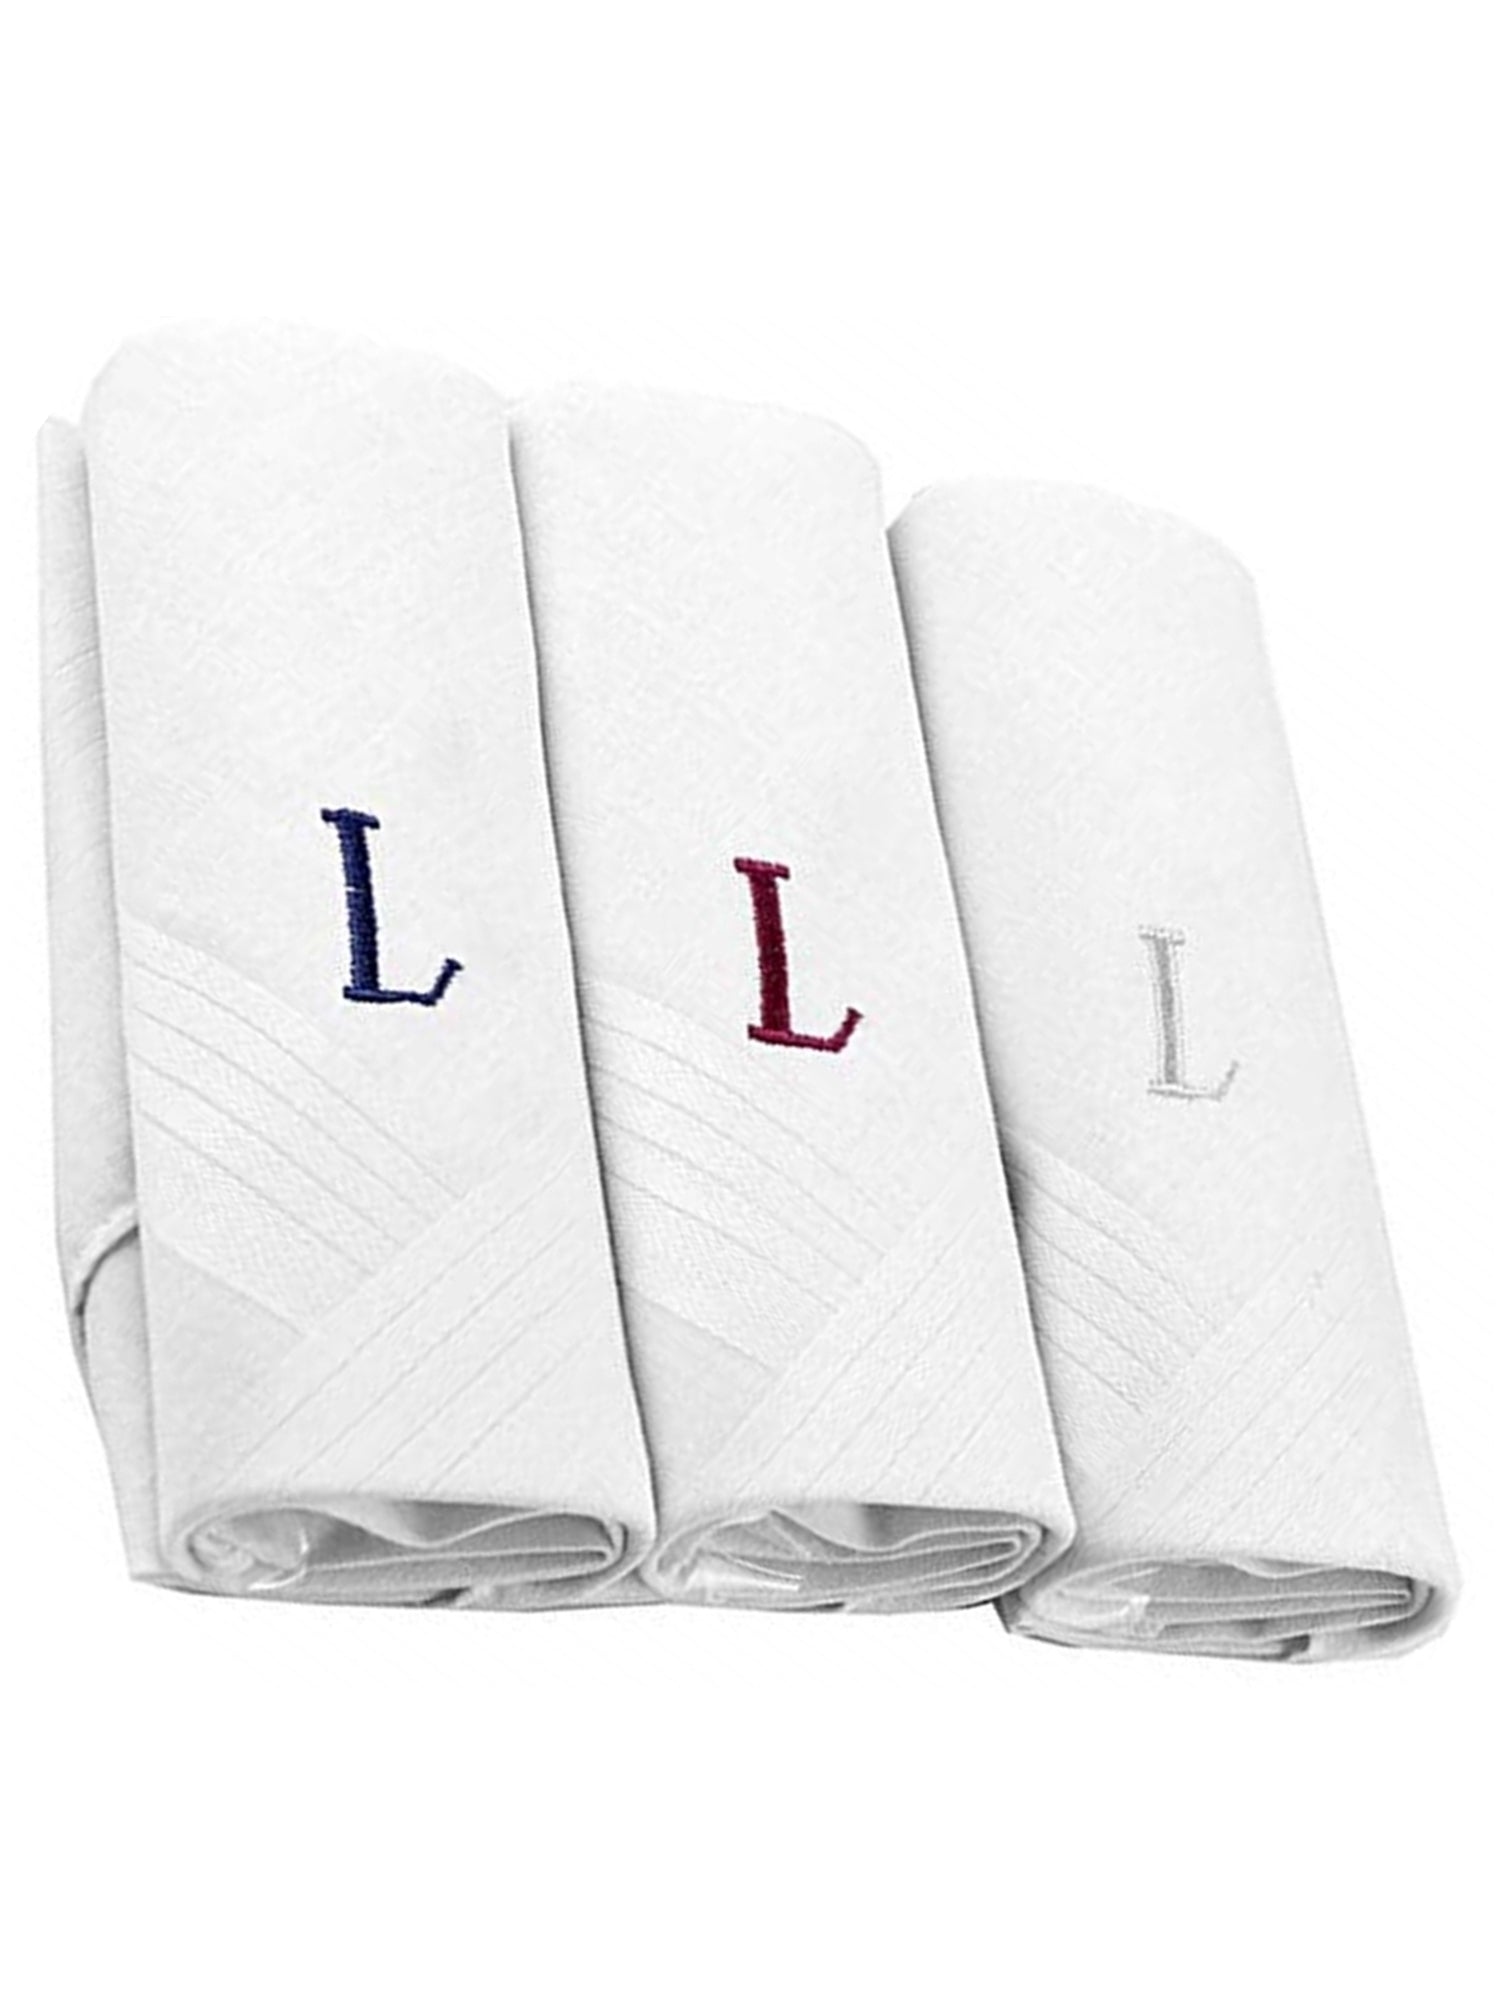 Men's Cotton Monogrammed Handkerchiefs Initial Letter Hanky Handkerchiefs TheDapperTie White L 2 x 3 Pack  